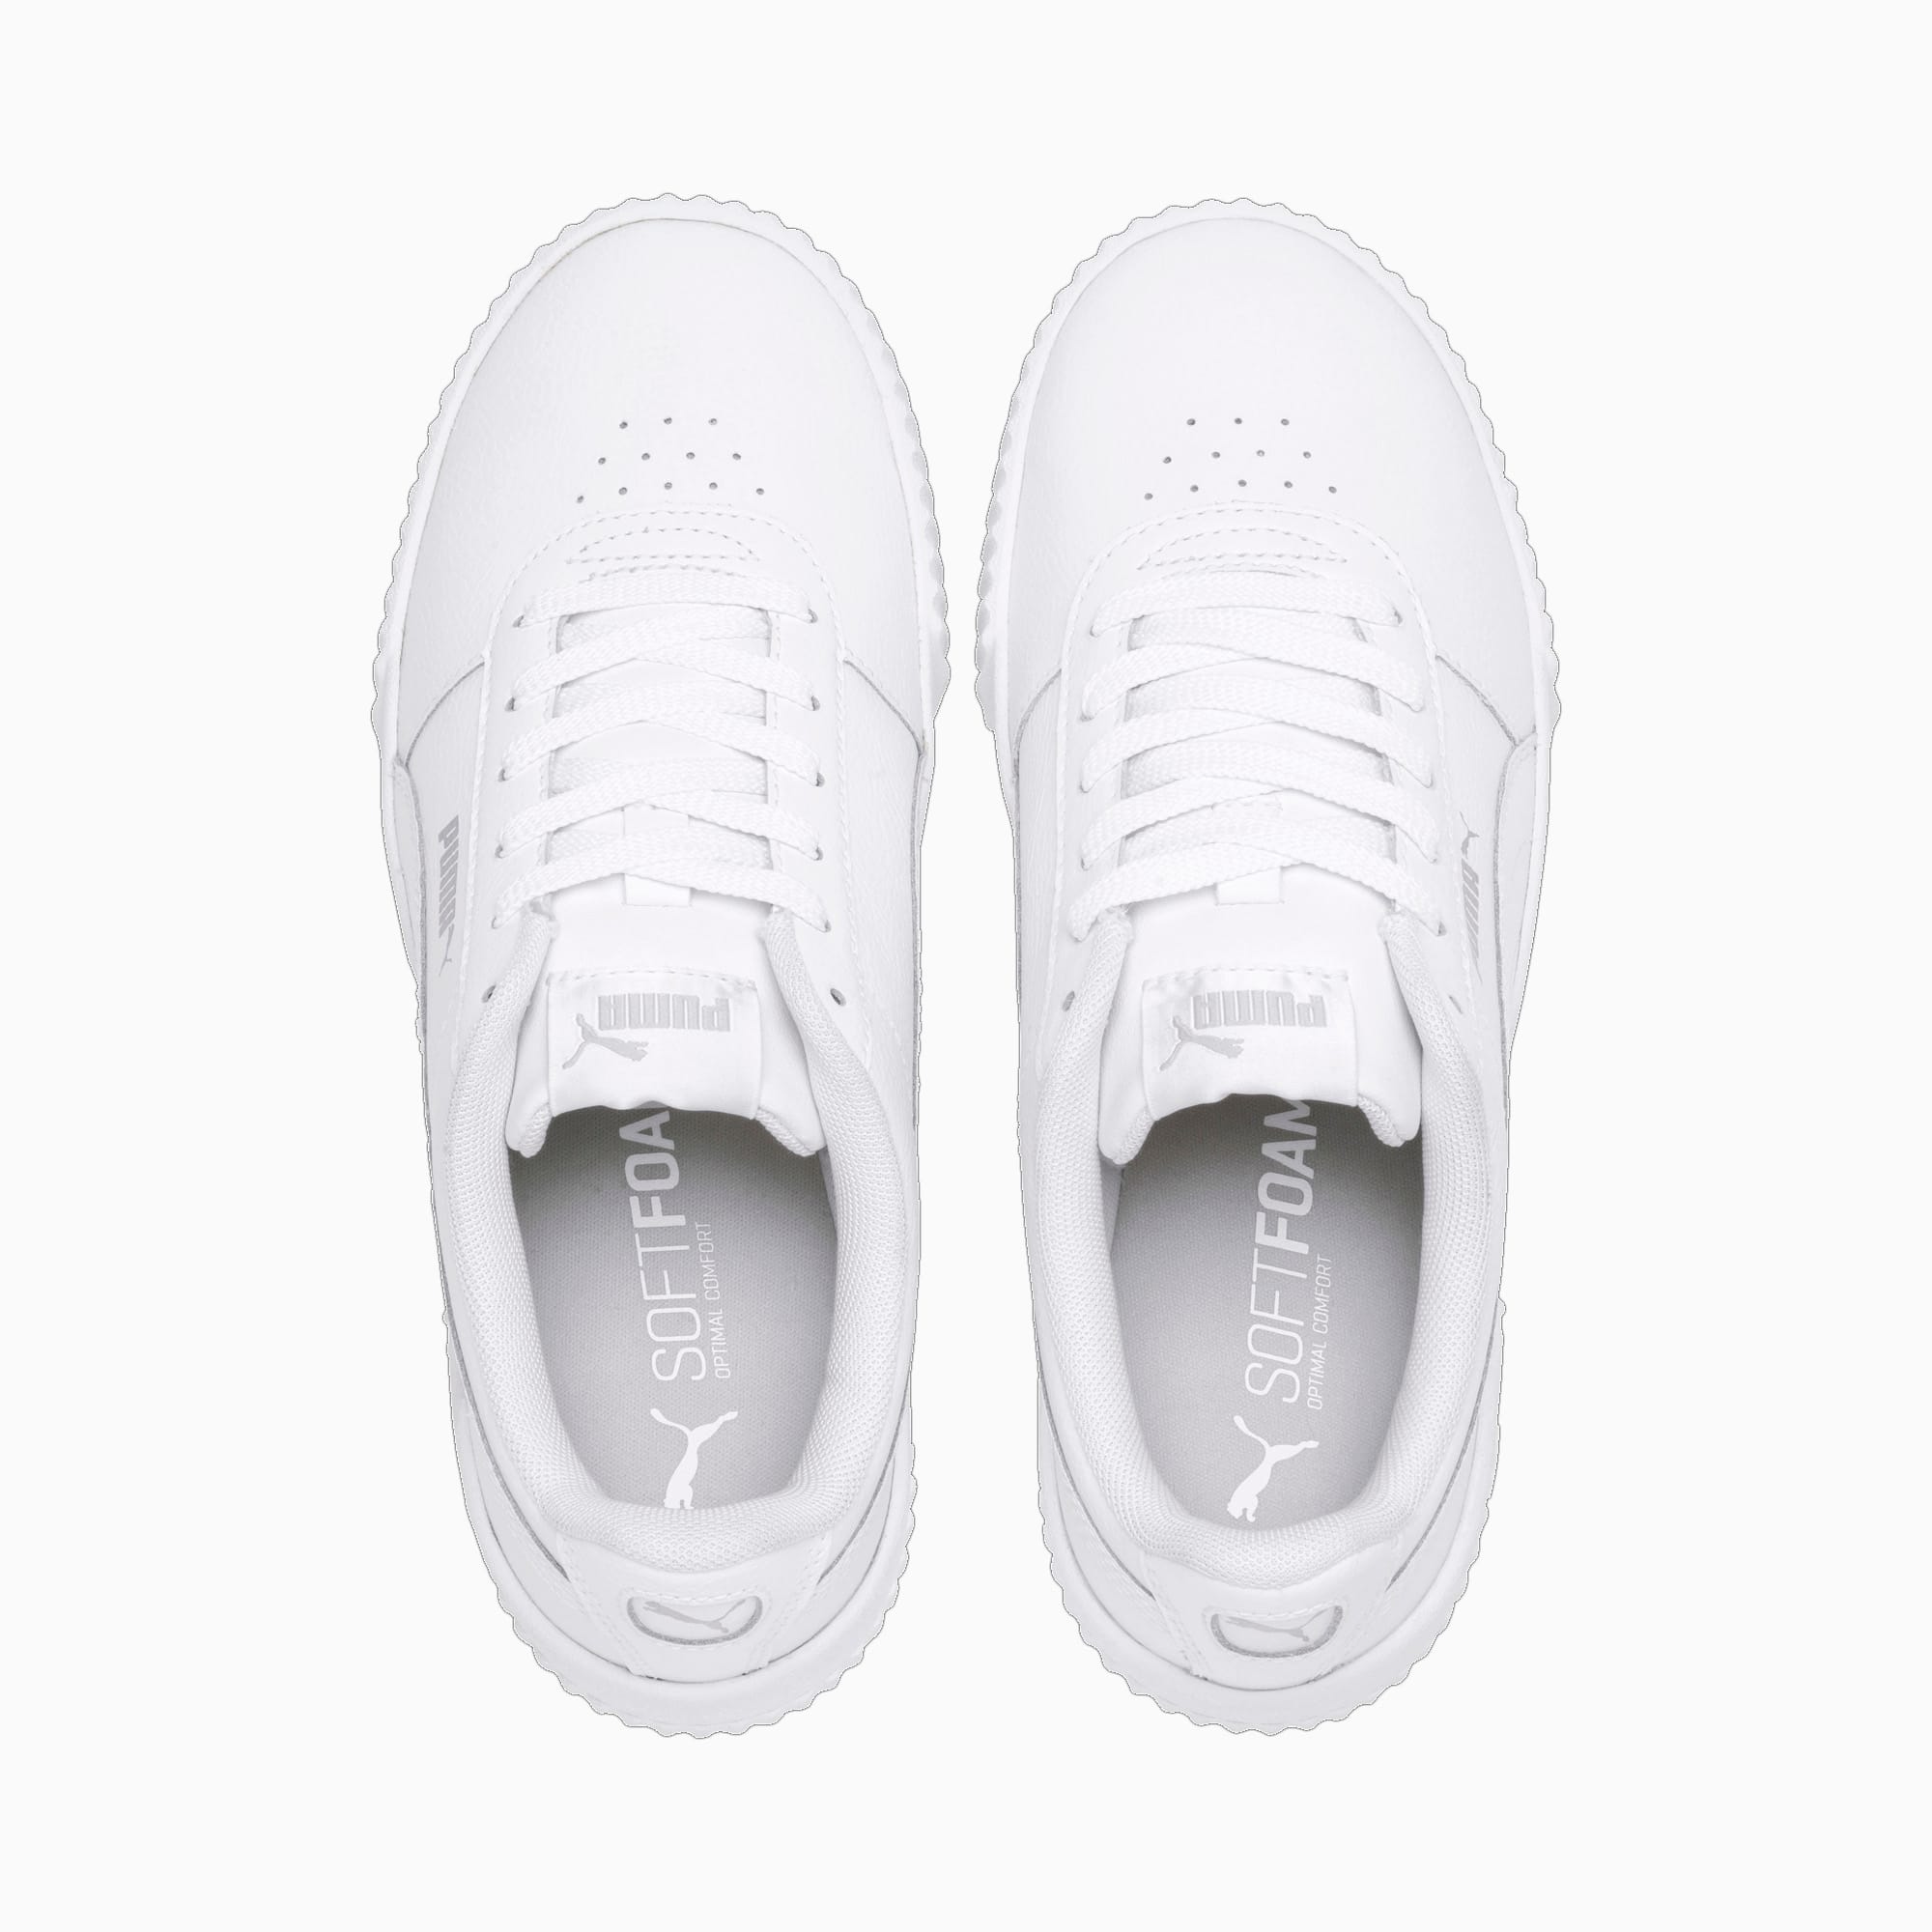 puma white shoes soft foam